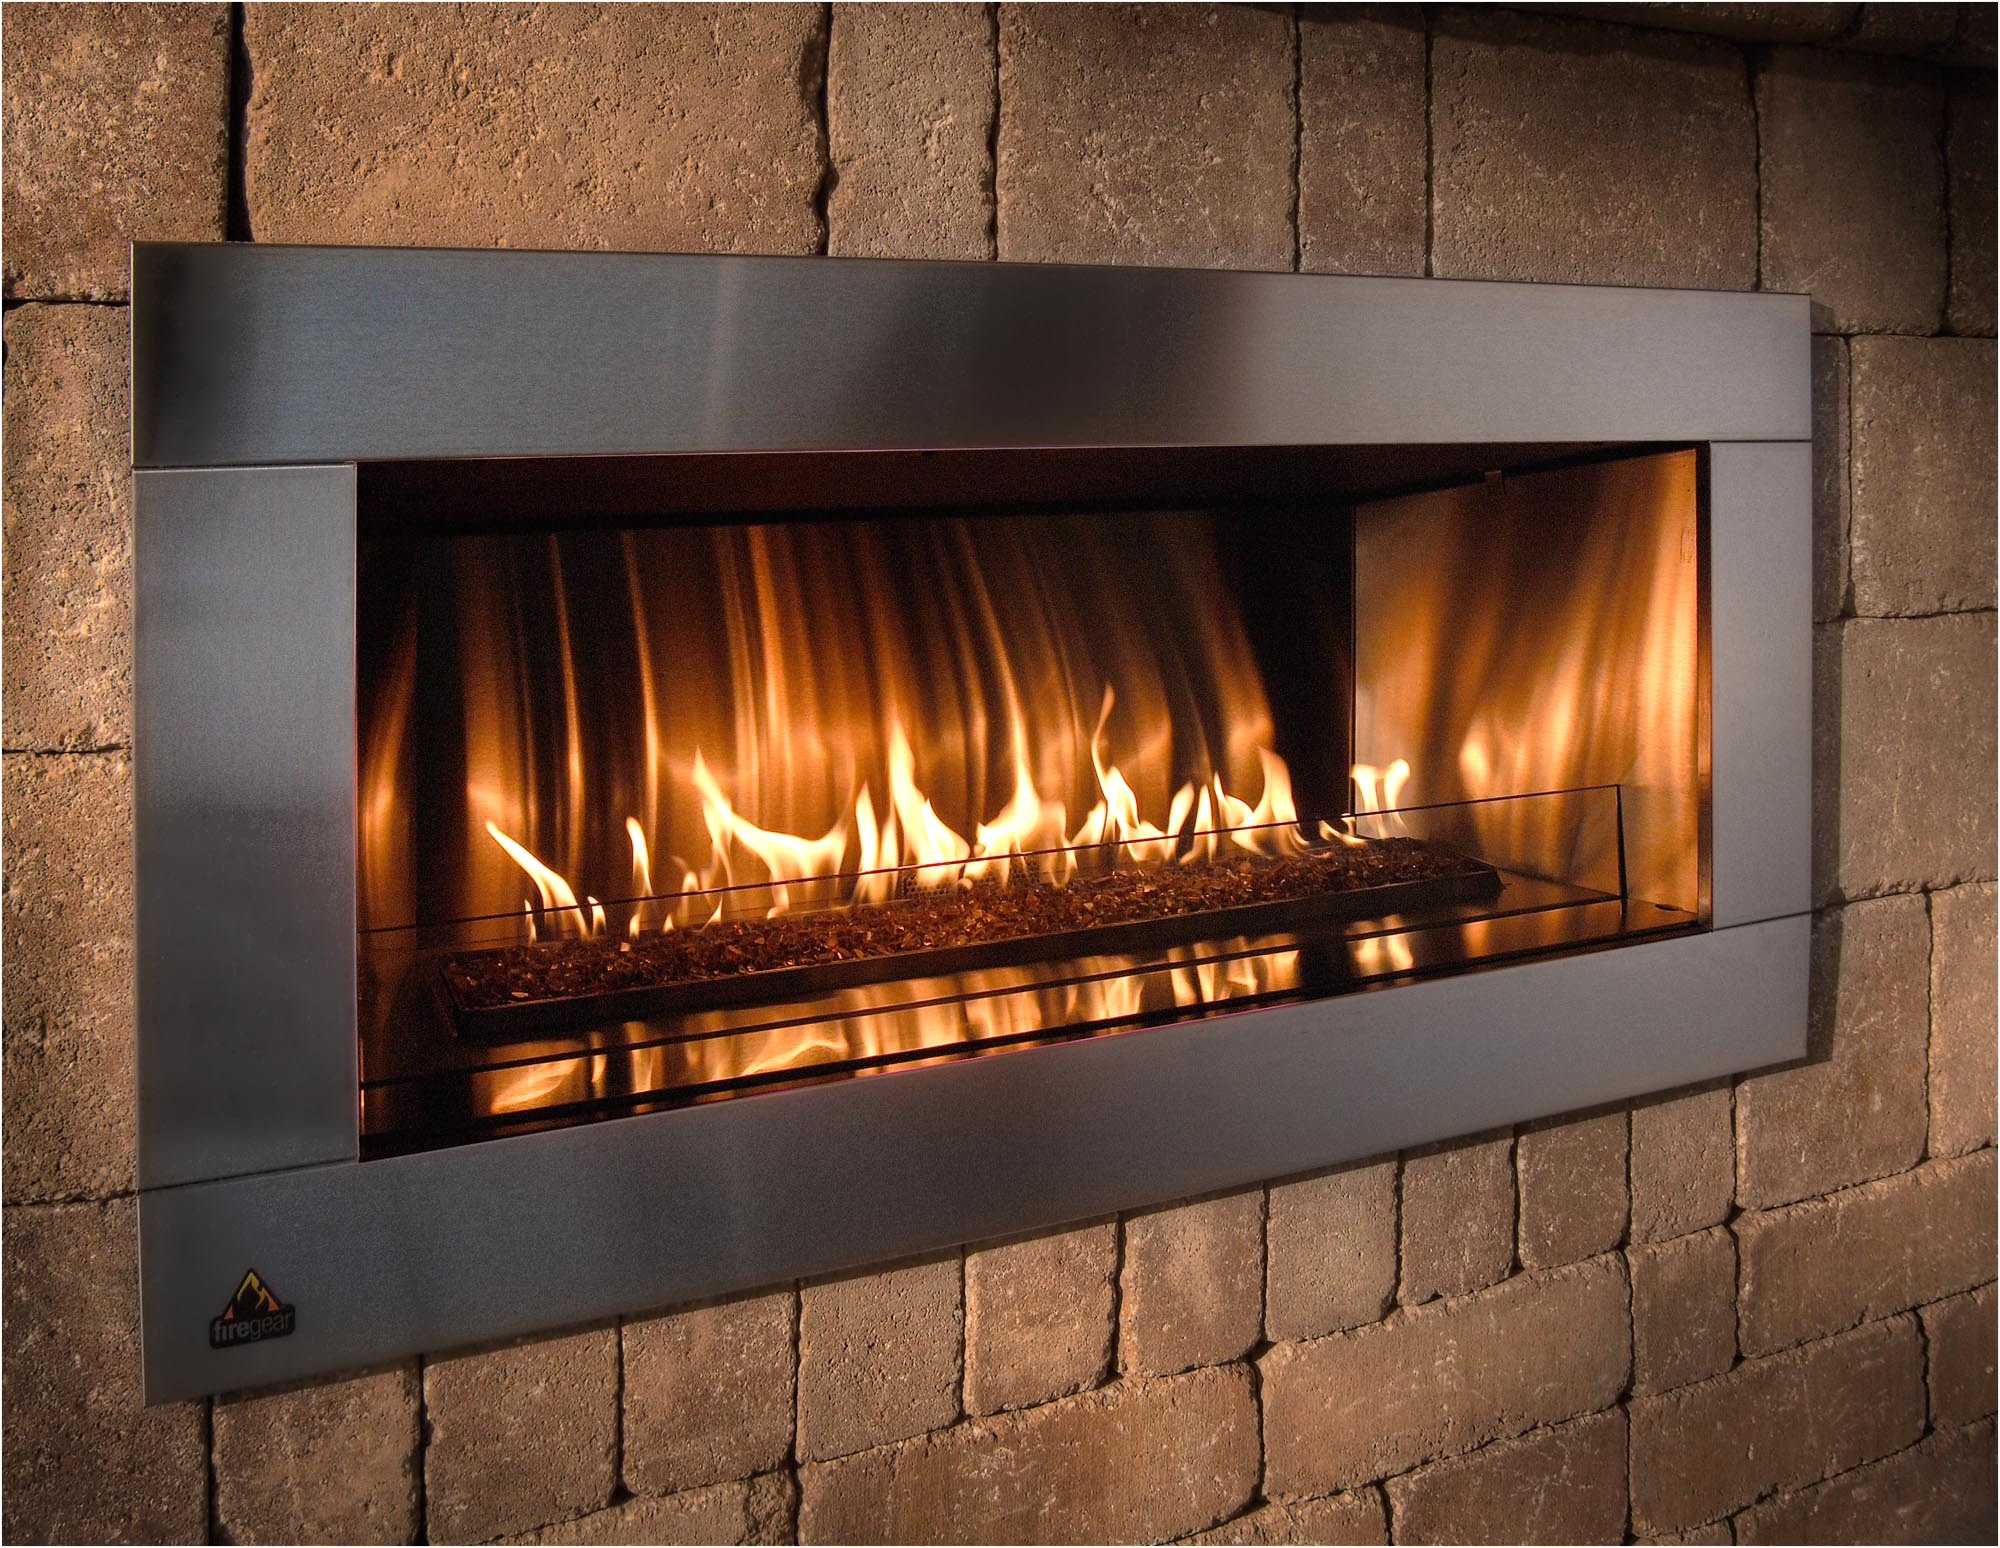 valor fireplace inserts reviews 19 valor gas fireplace inserts reviews h2o karlssonproject of valor fireplace inserts reviews 2